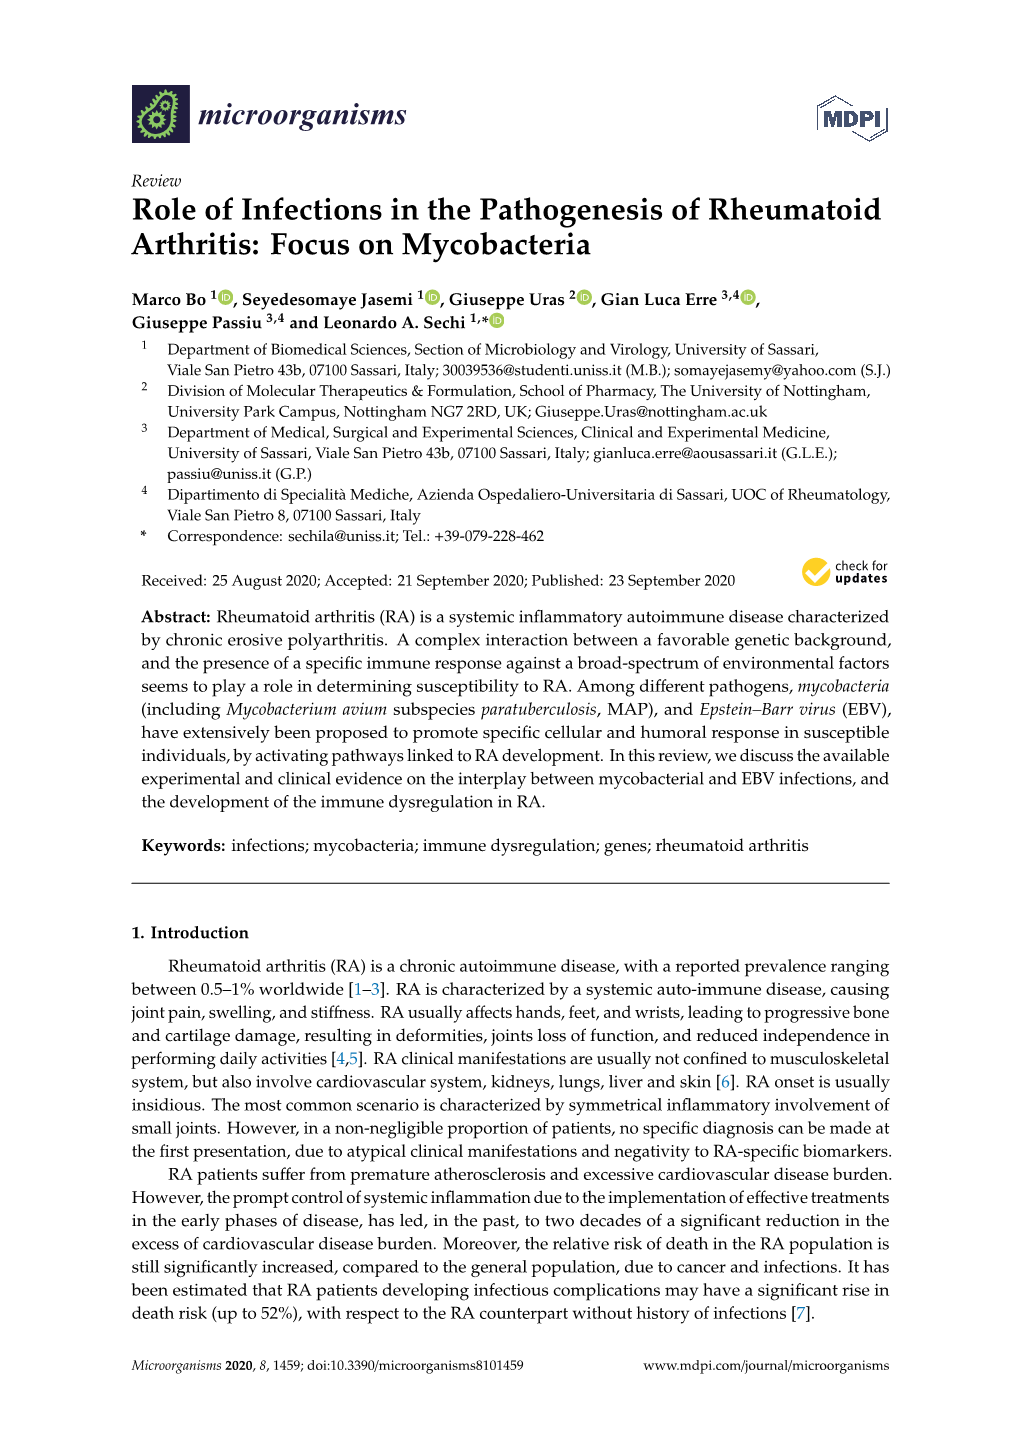 Role of Infections in the Pathogenesis of Rheumatoid Arthritis: Focus on Mycobacteria